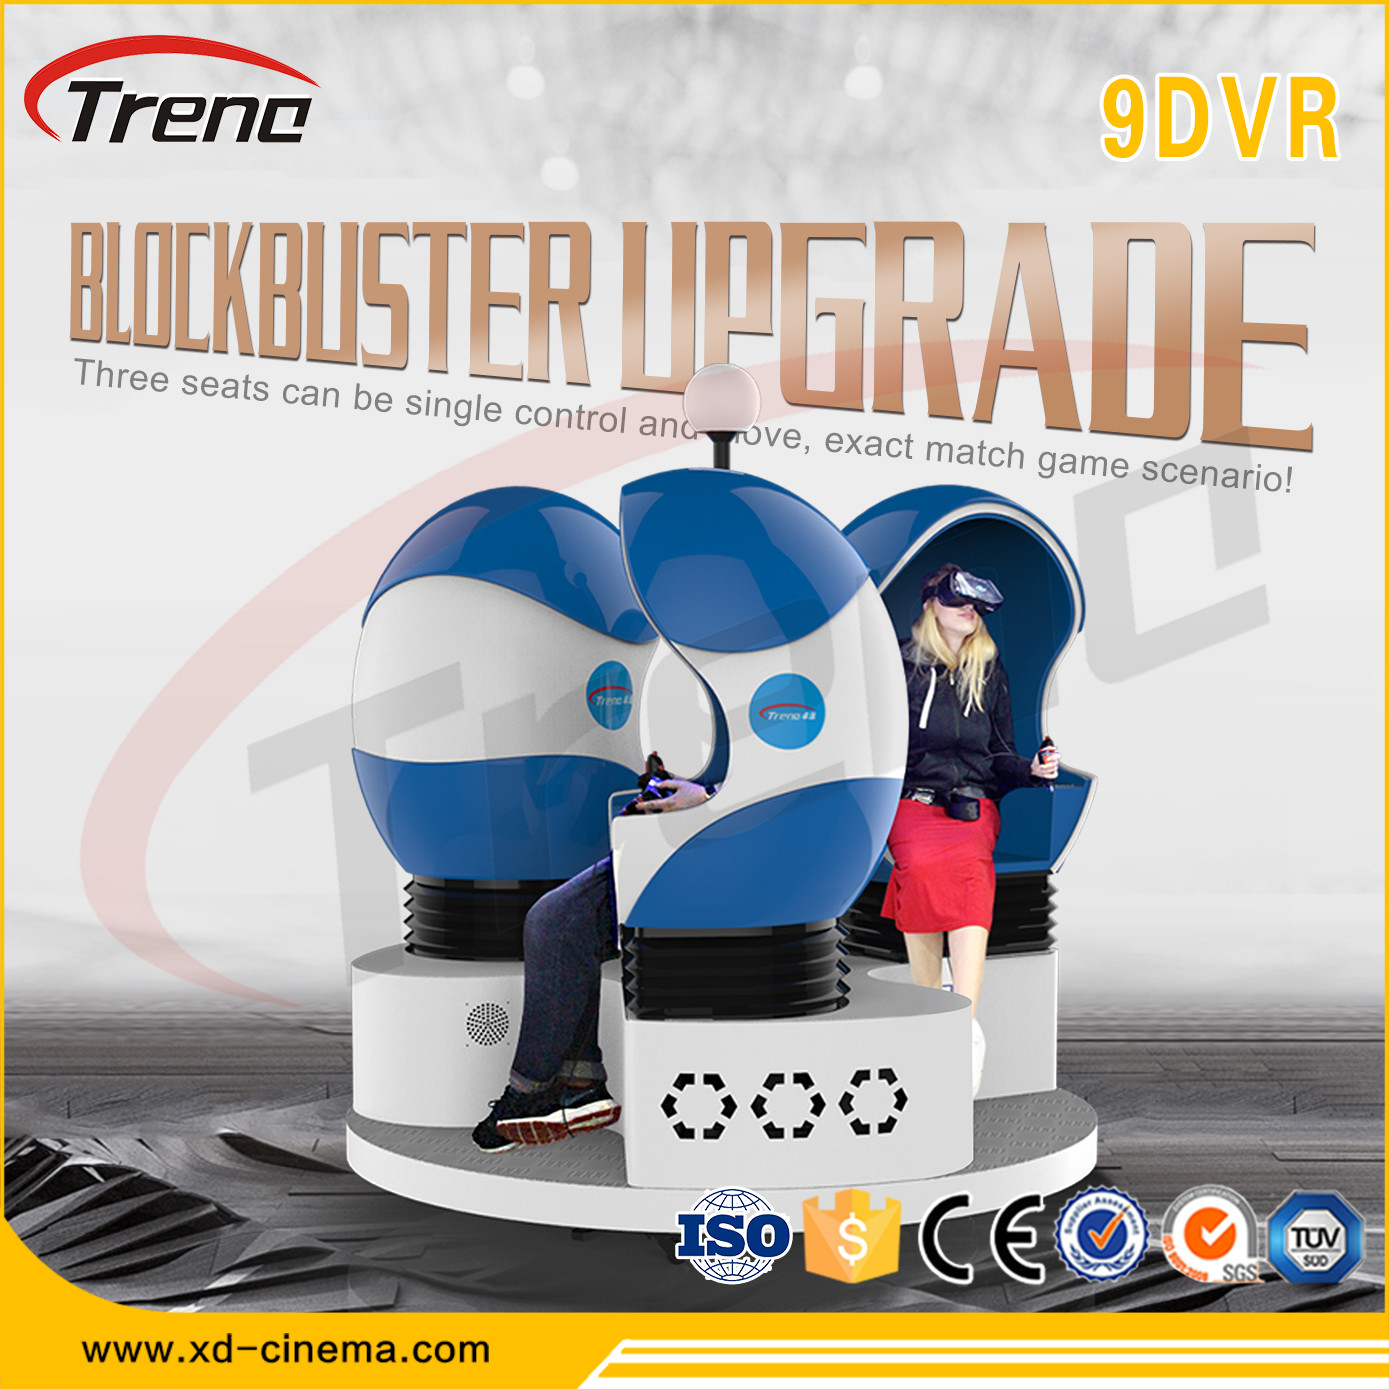 360 ° Döner Platform 9D VR Ekipmanı 6 Seater 9D Eylem Sinema CE Sertifikası